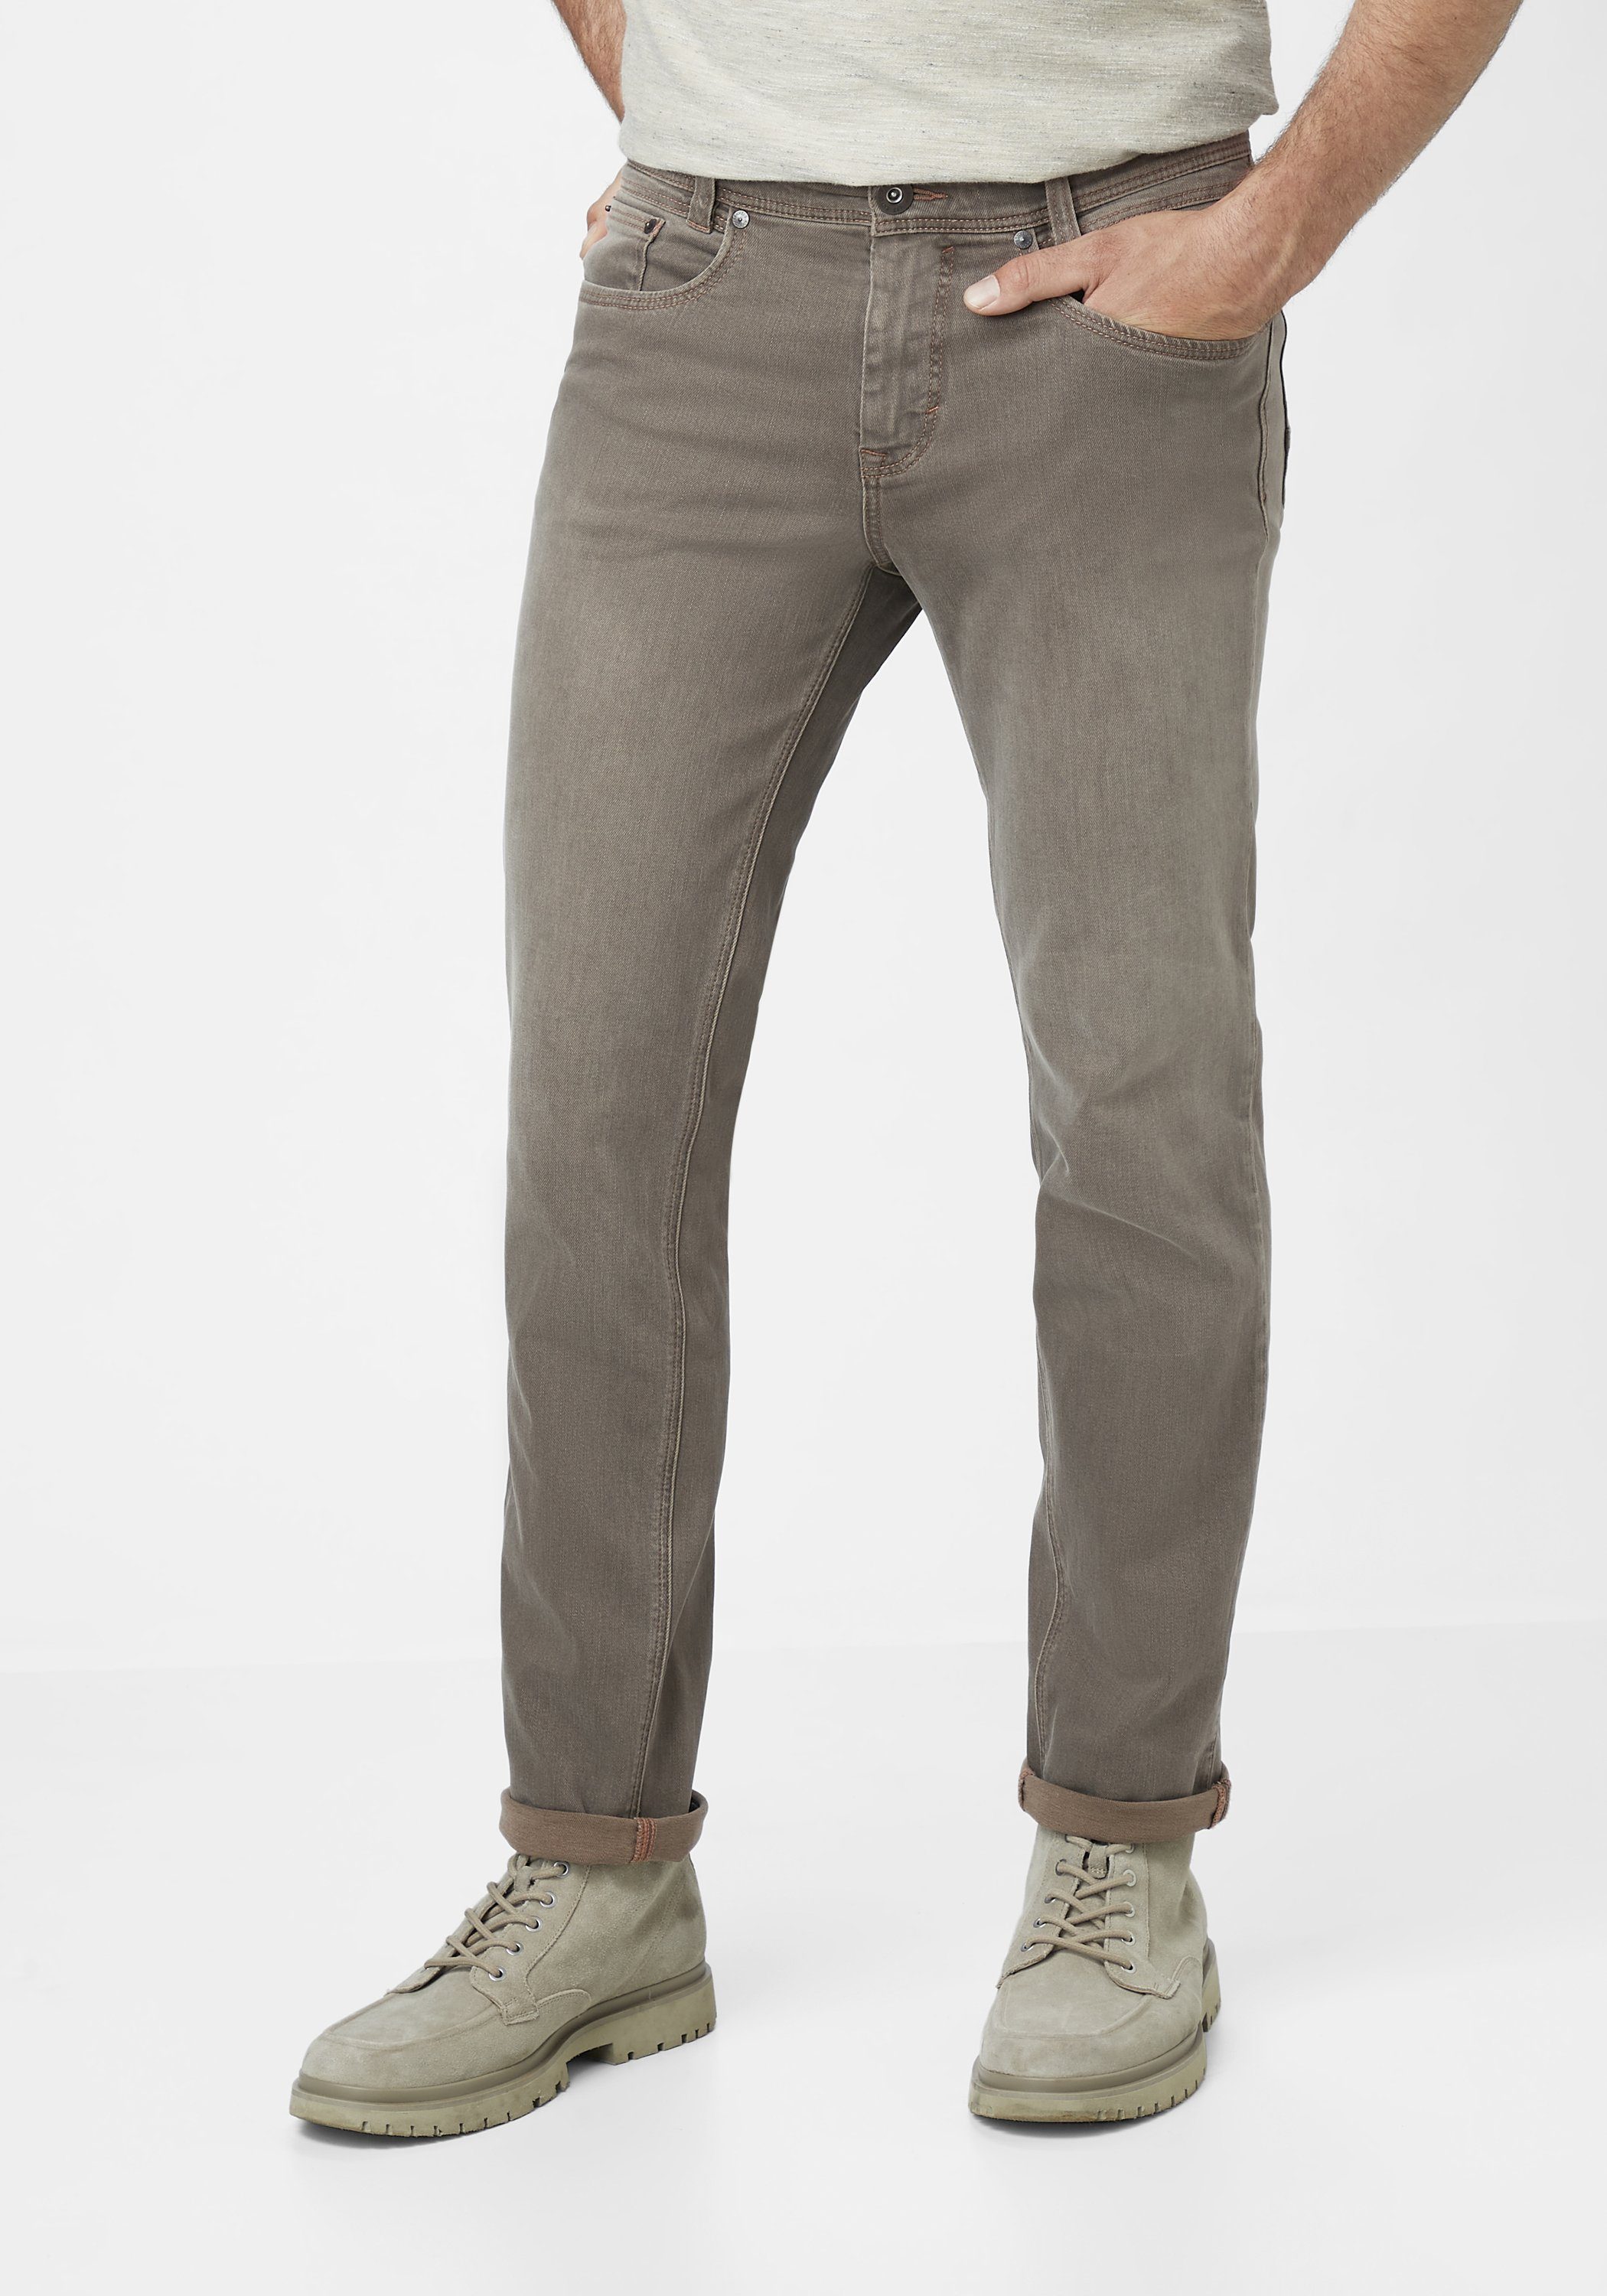 mit & PIPE Jeans Paddock's Motion Stretch Slim-fit-Jeans 5-Pocket Comfort